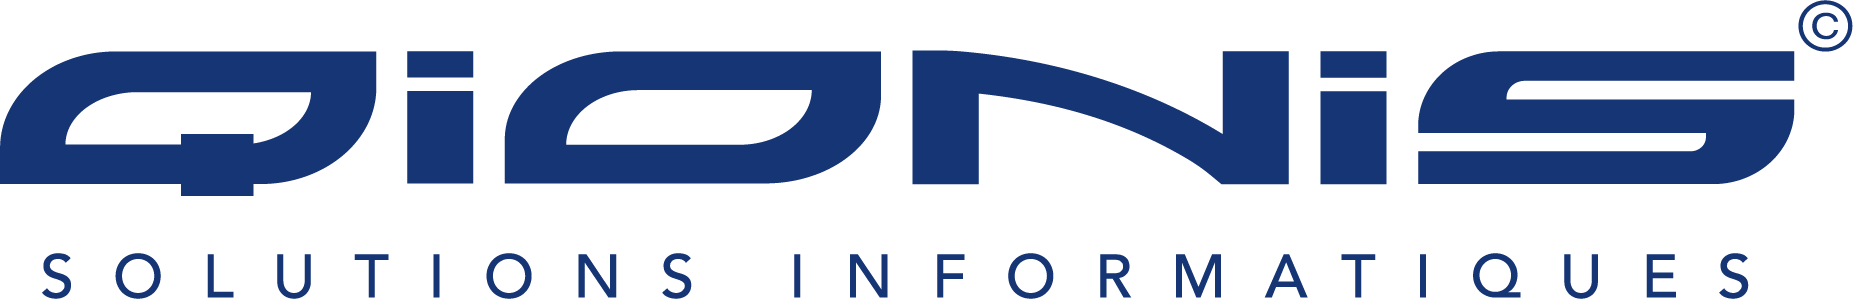 qionis logo-lignt-navy